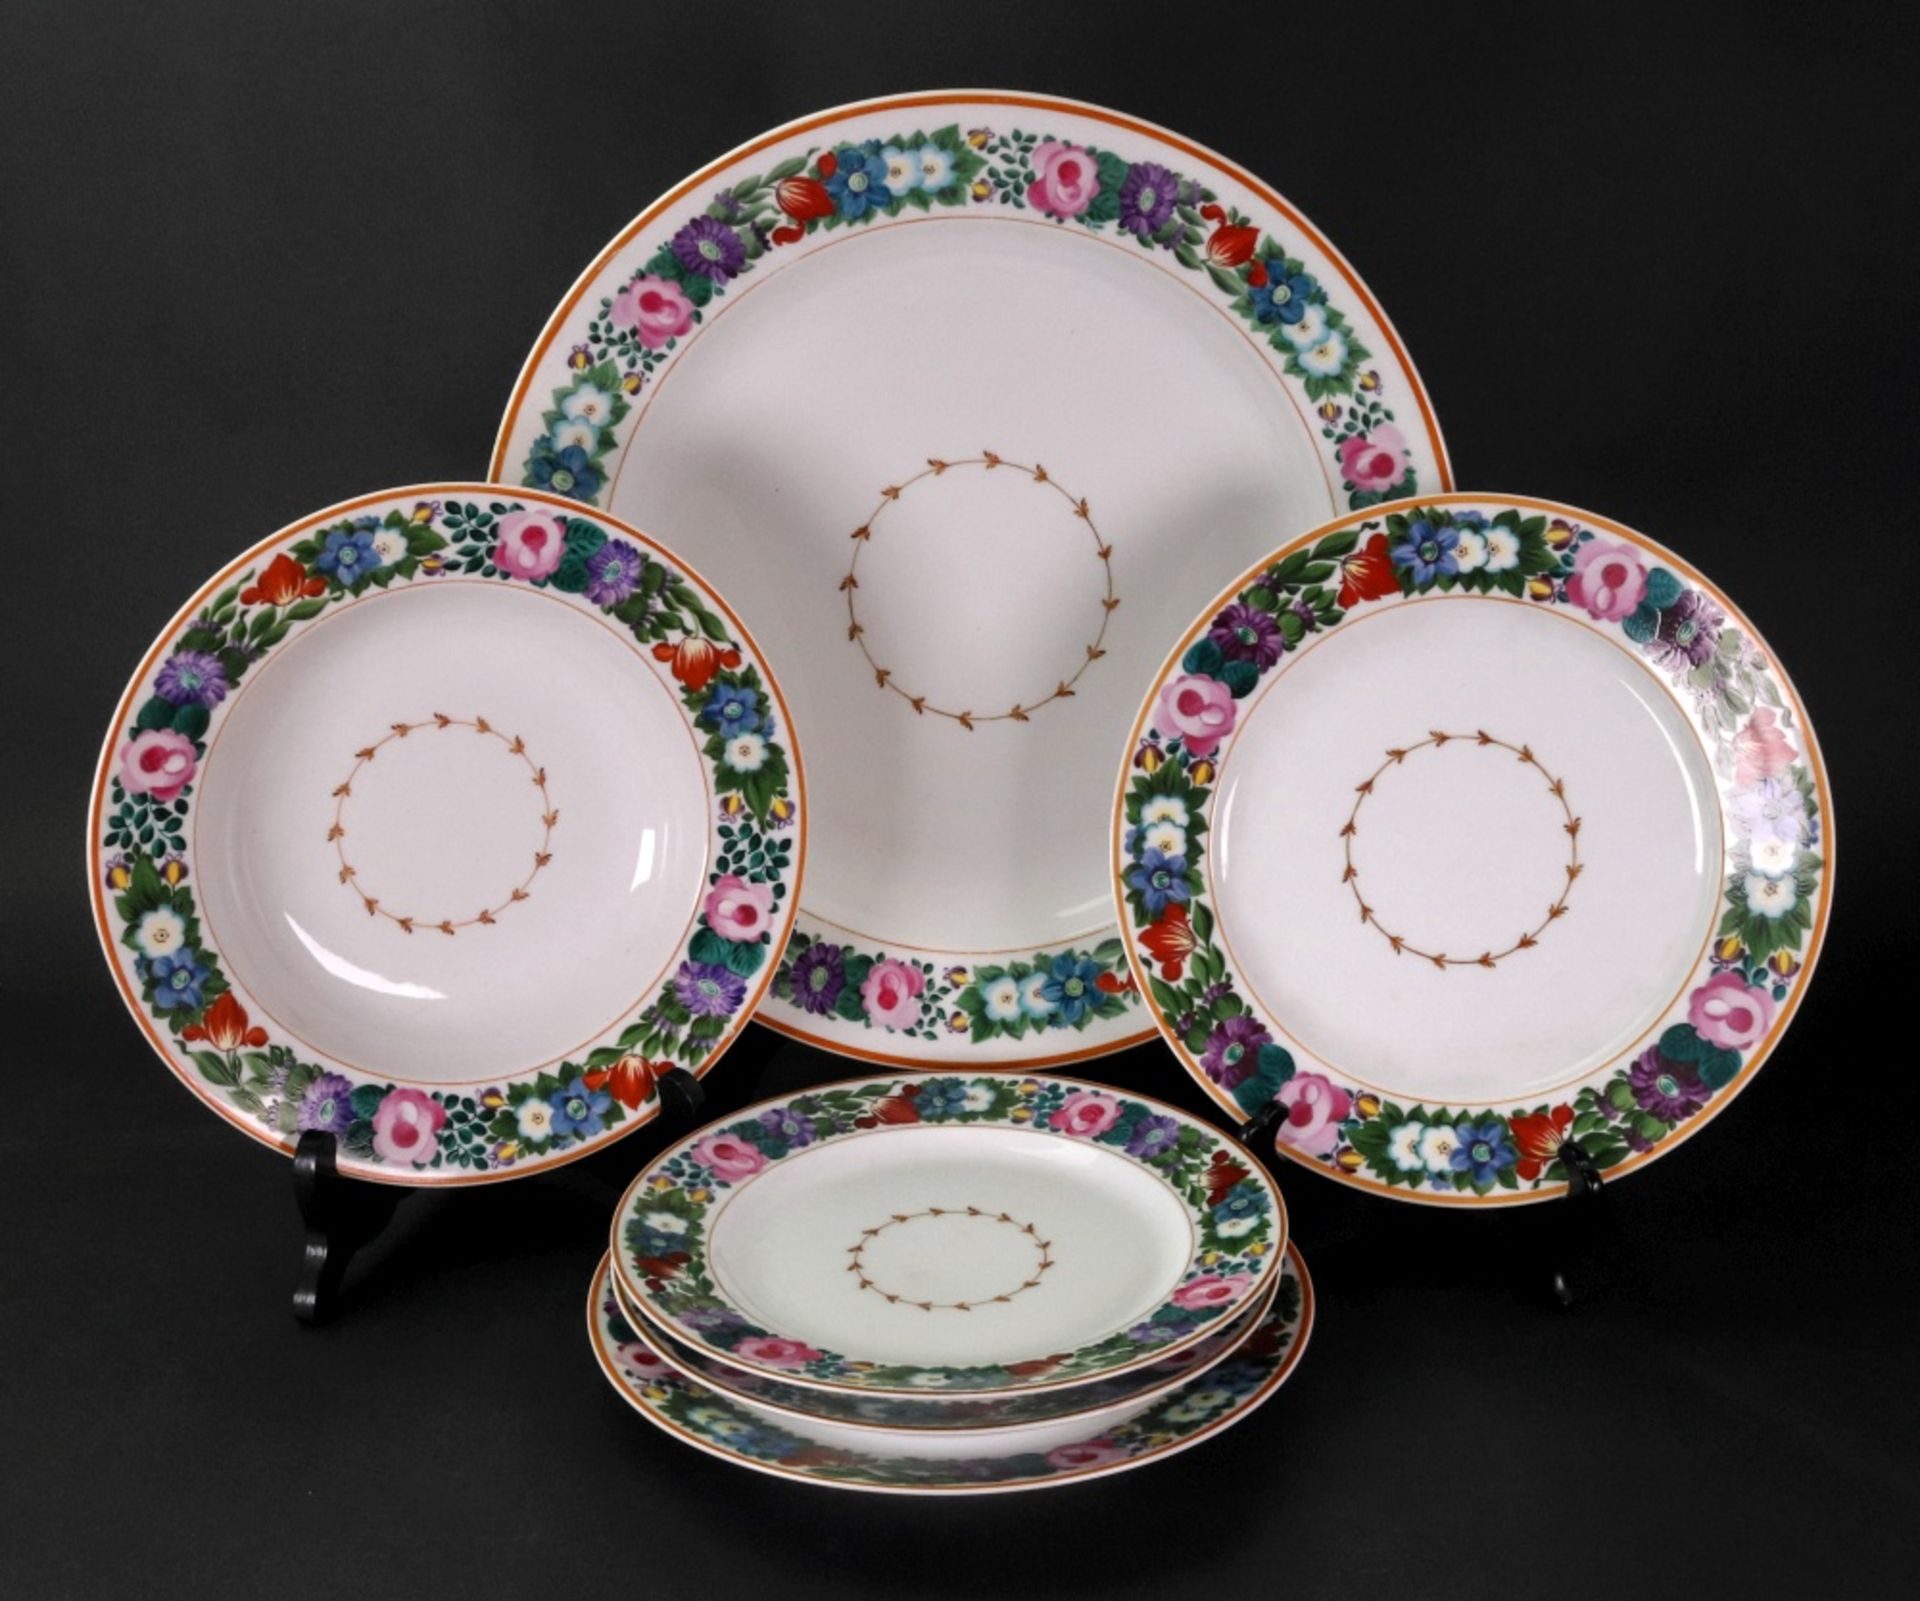 A large Russian circular bowl, a smaller bowl and four plates, - Bild 2 aus 11